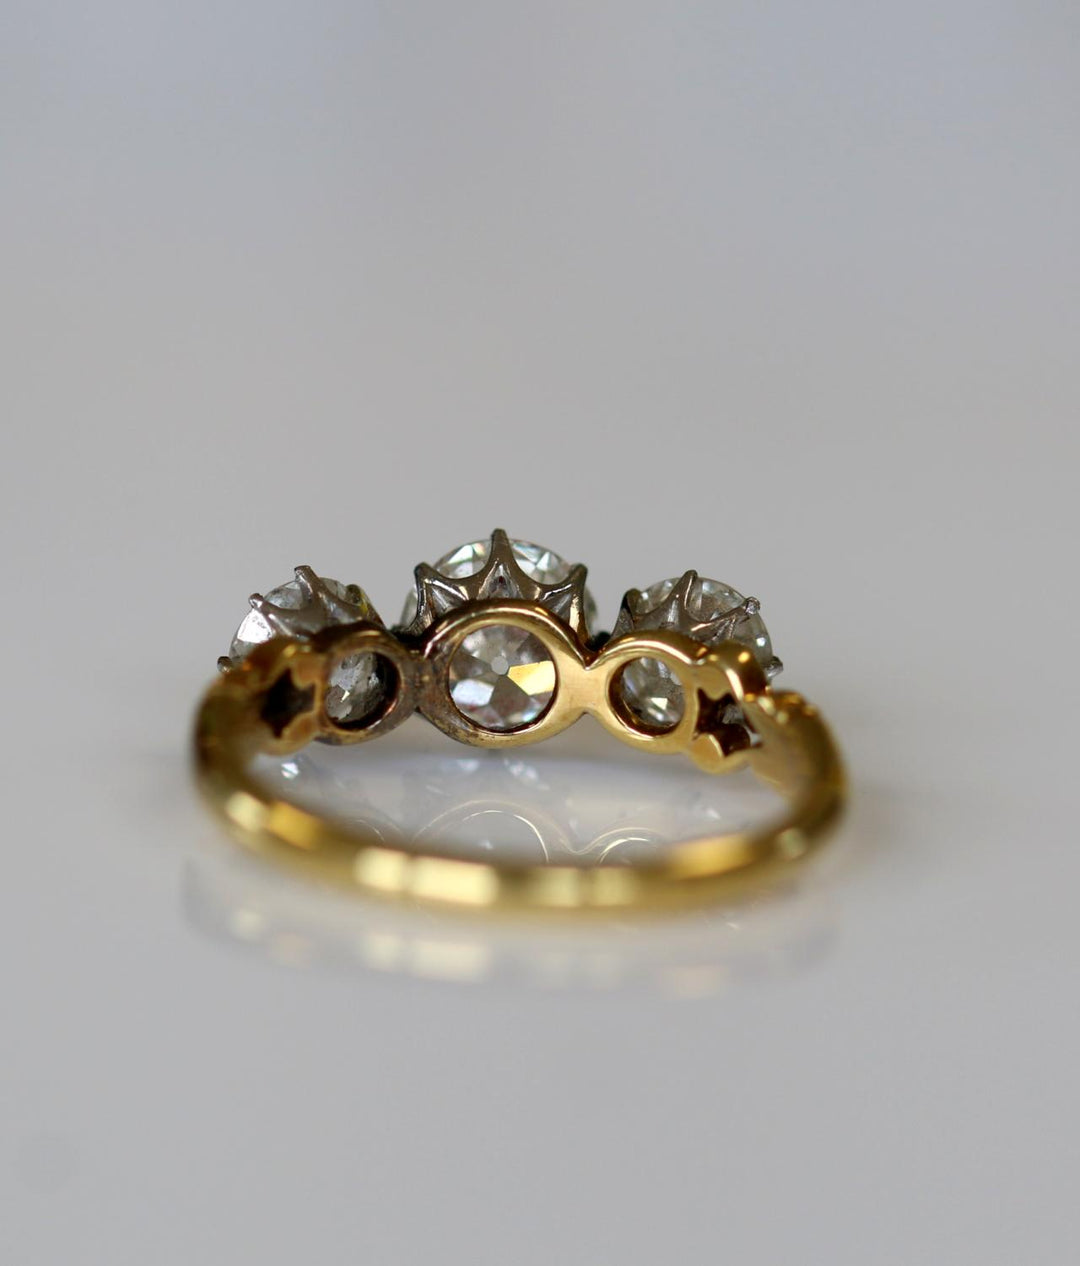 Victorian Old Cut Three-Stone Diamond Ring - SOLD